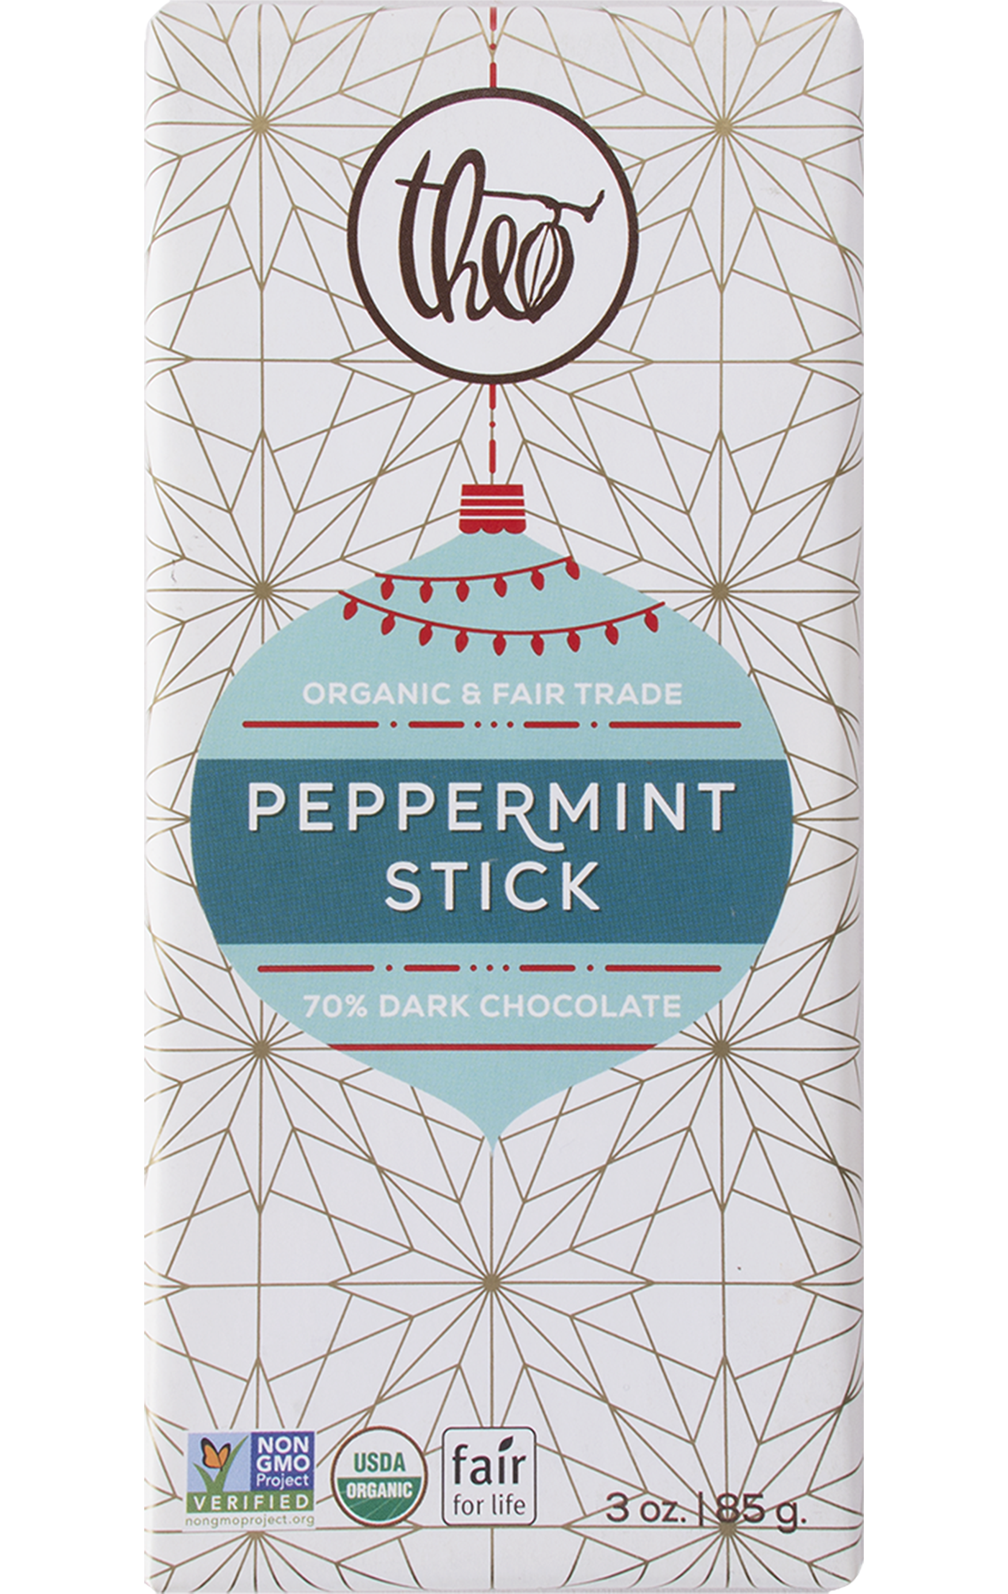 Peppermint Stick 70% Dark Chocolate